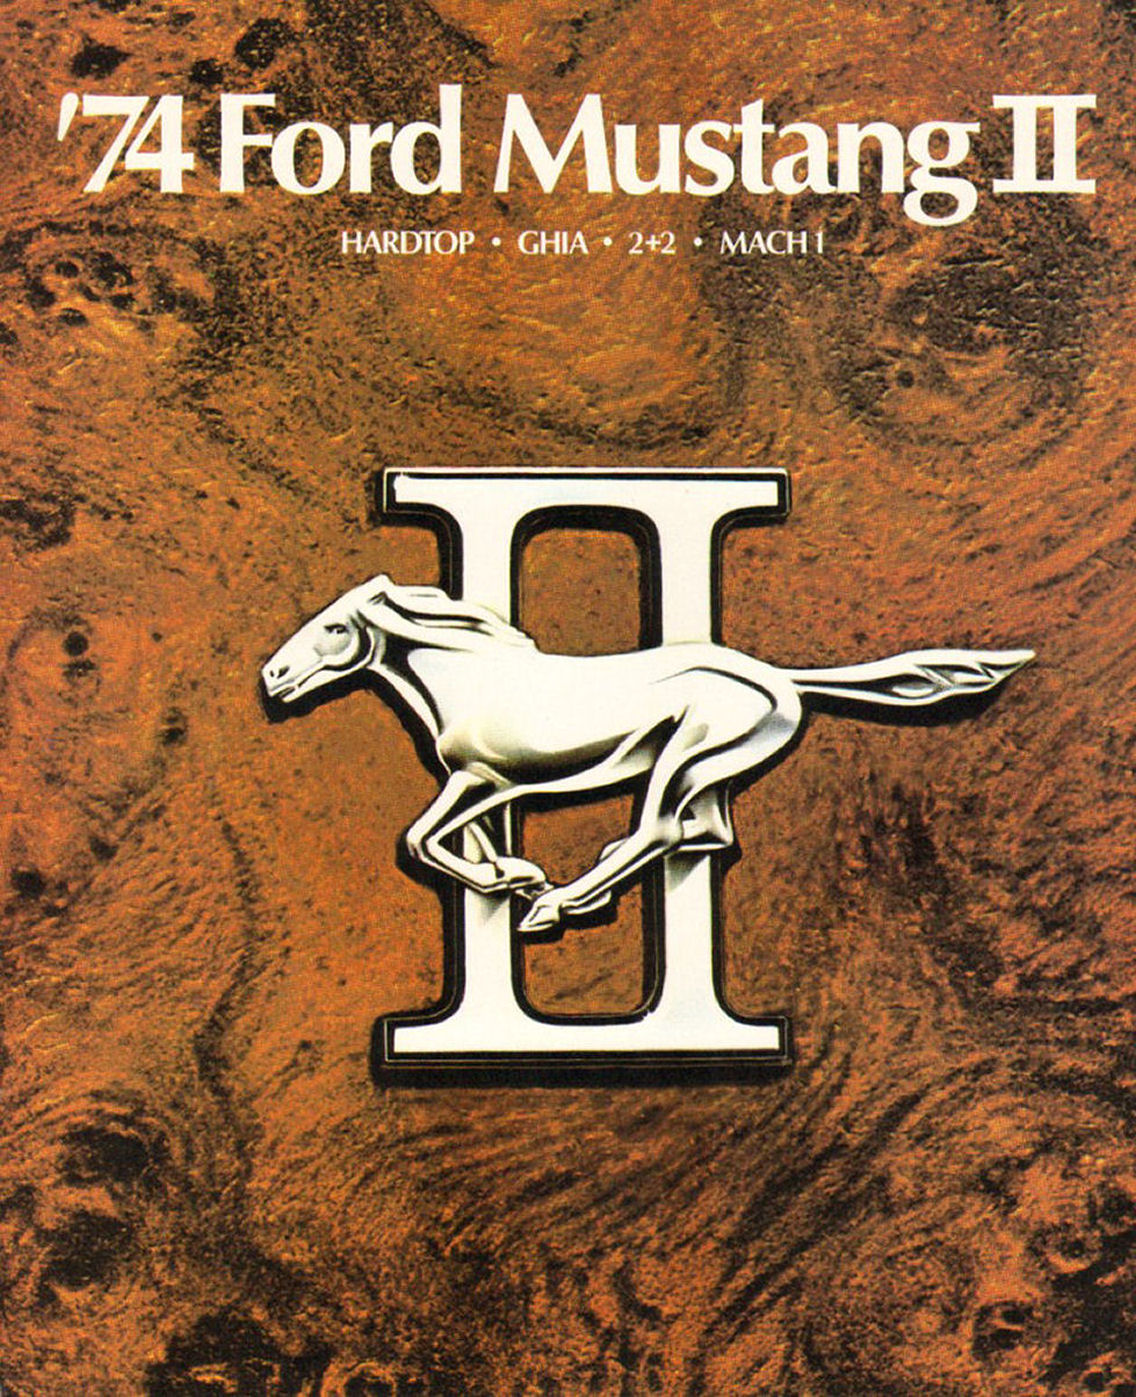 1974_Ford_Mustang_II_Rev-01